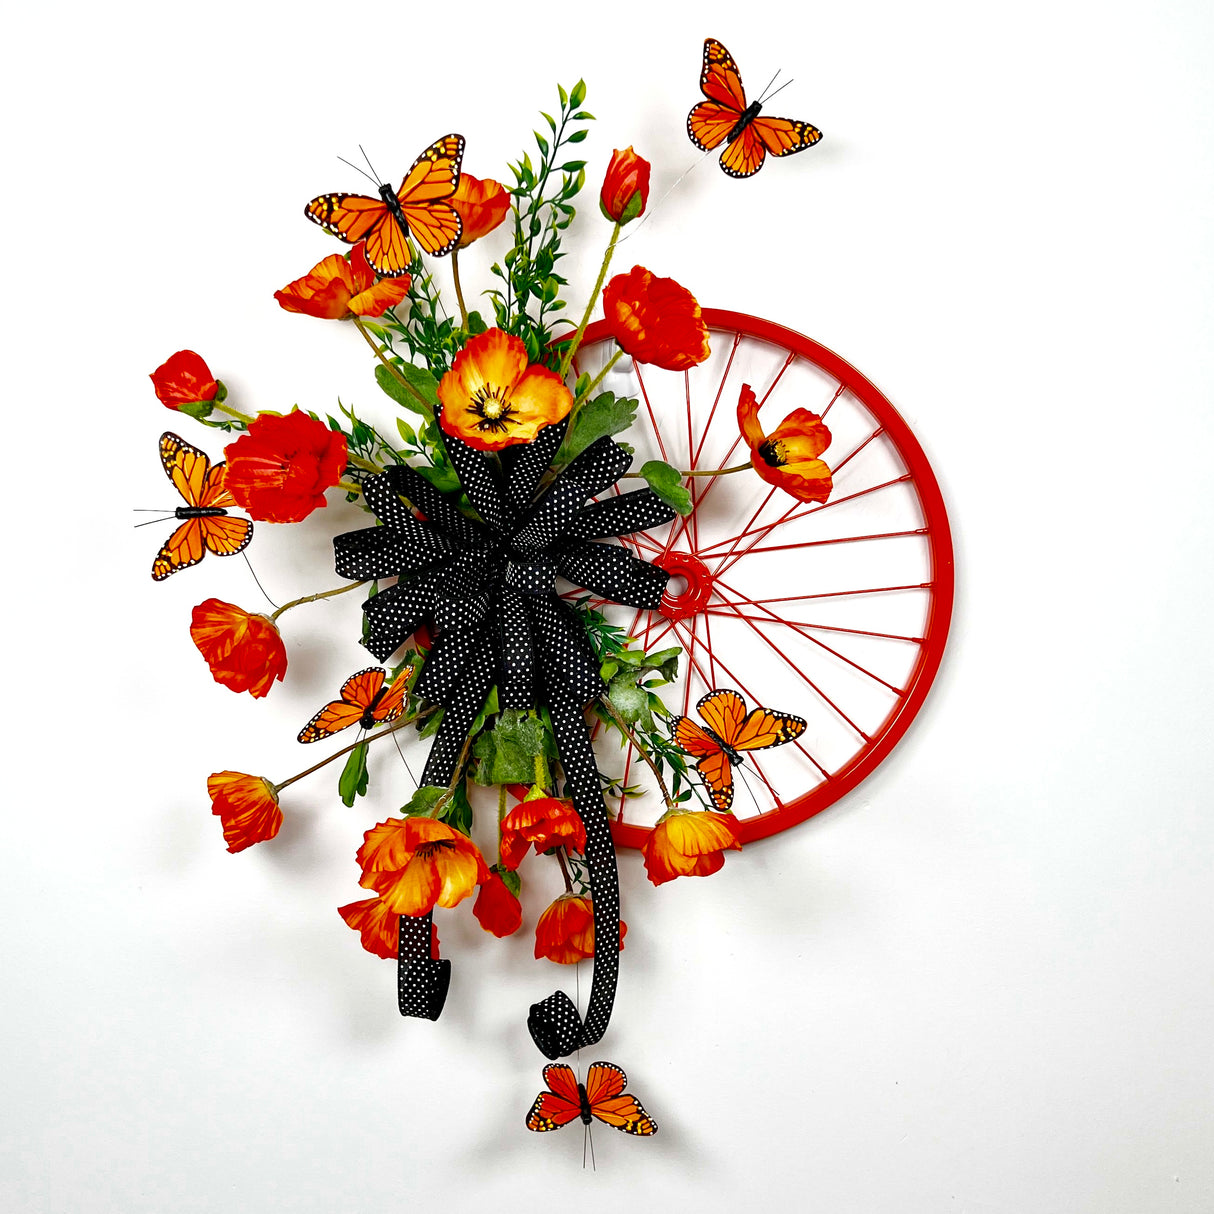 Wreath Community Orange Poppy Bicycle Wheel Kit